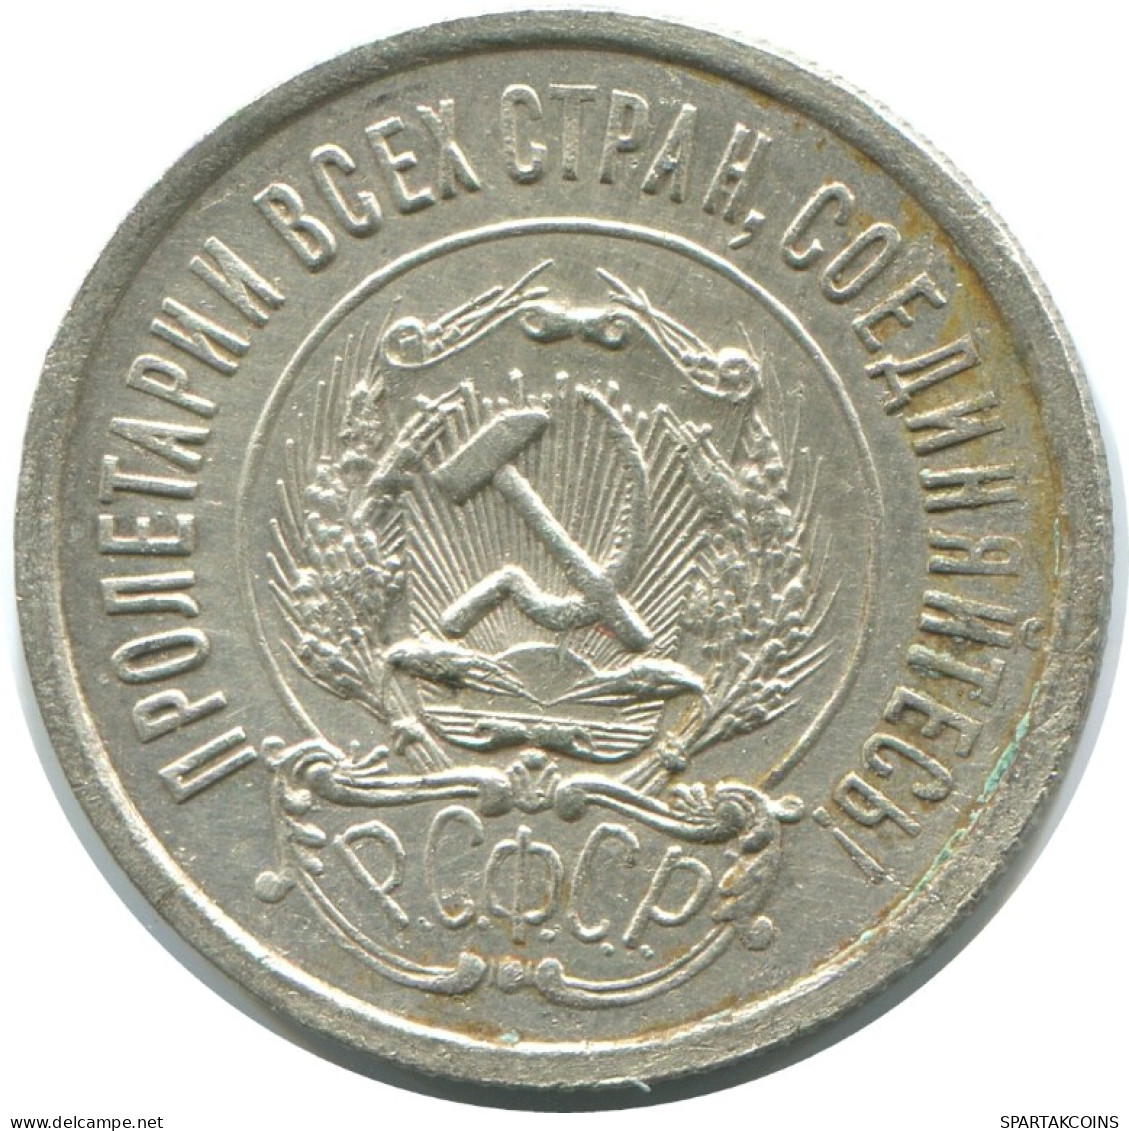 20 KOPEKS 1923 RUSSLAND RUSSIA RSFSR SILBER Münze HIGH GRADE #AF547.4.D.A - Russie